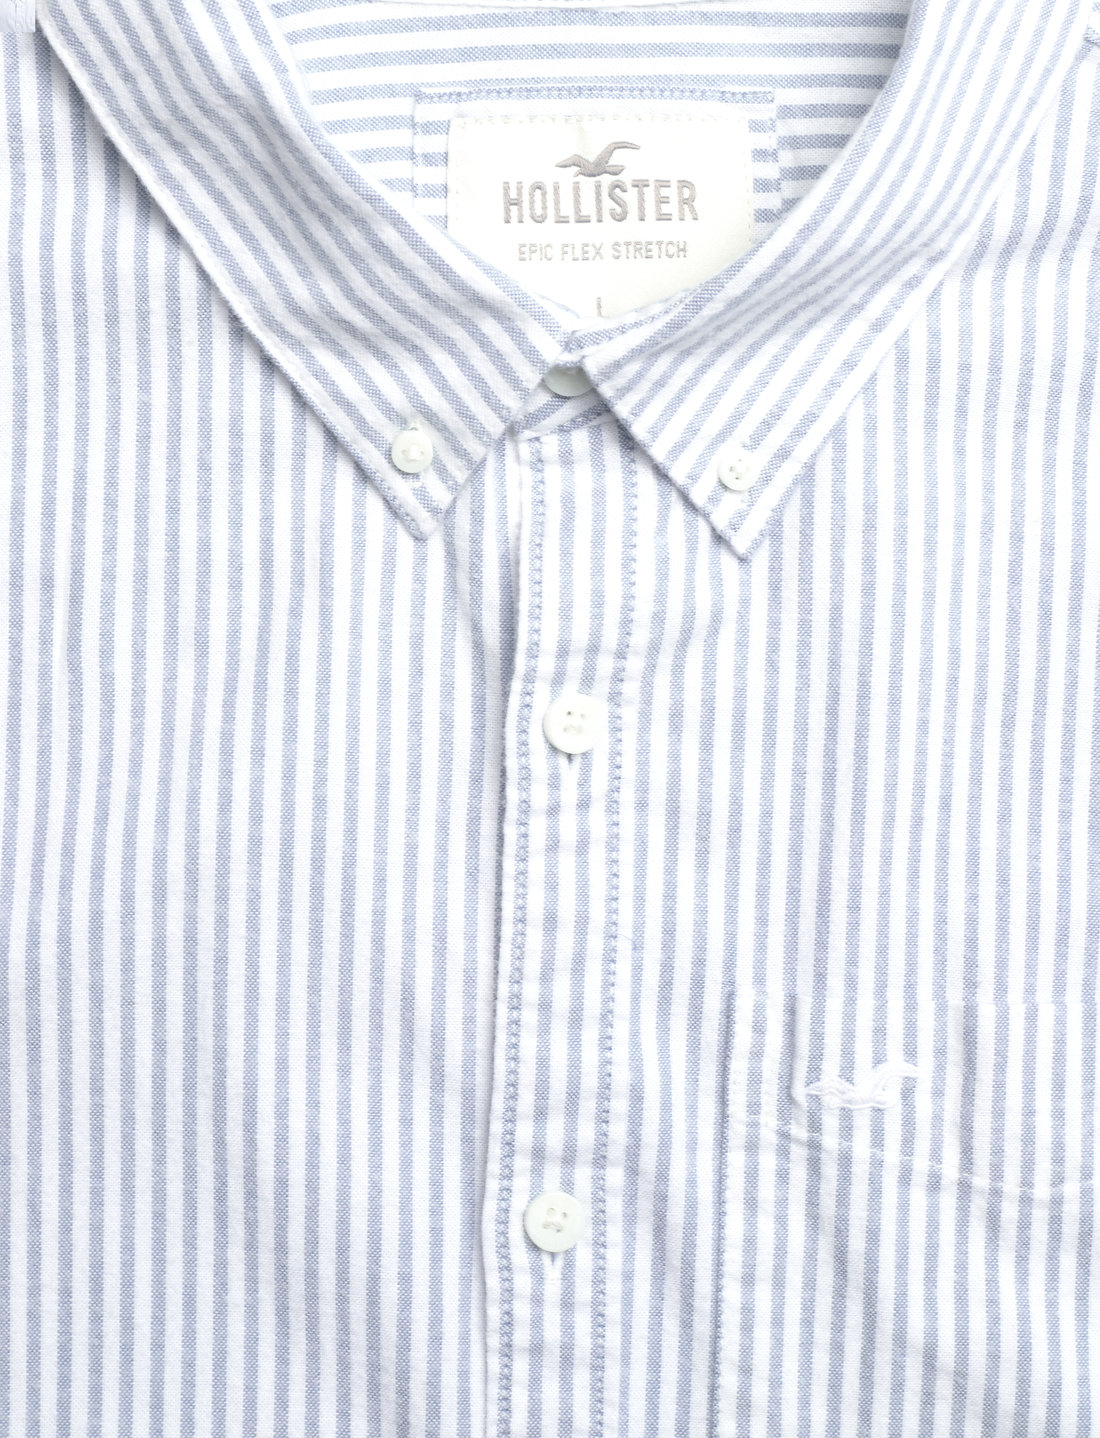 Hollister Hco. Guys Wovens - Casual shirts 